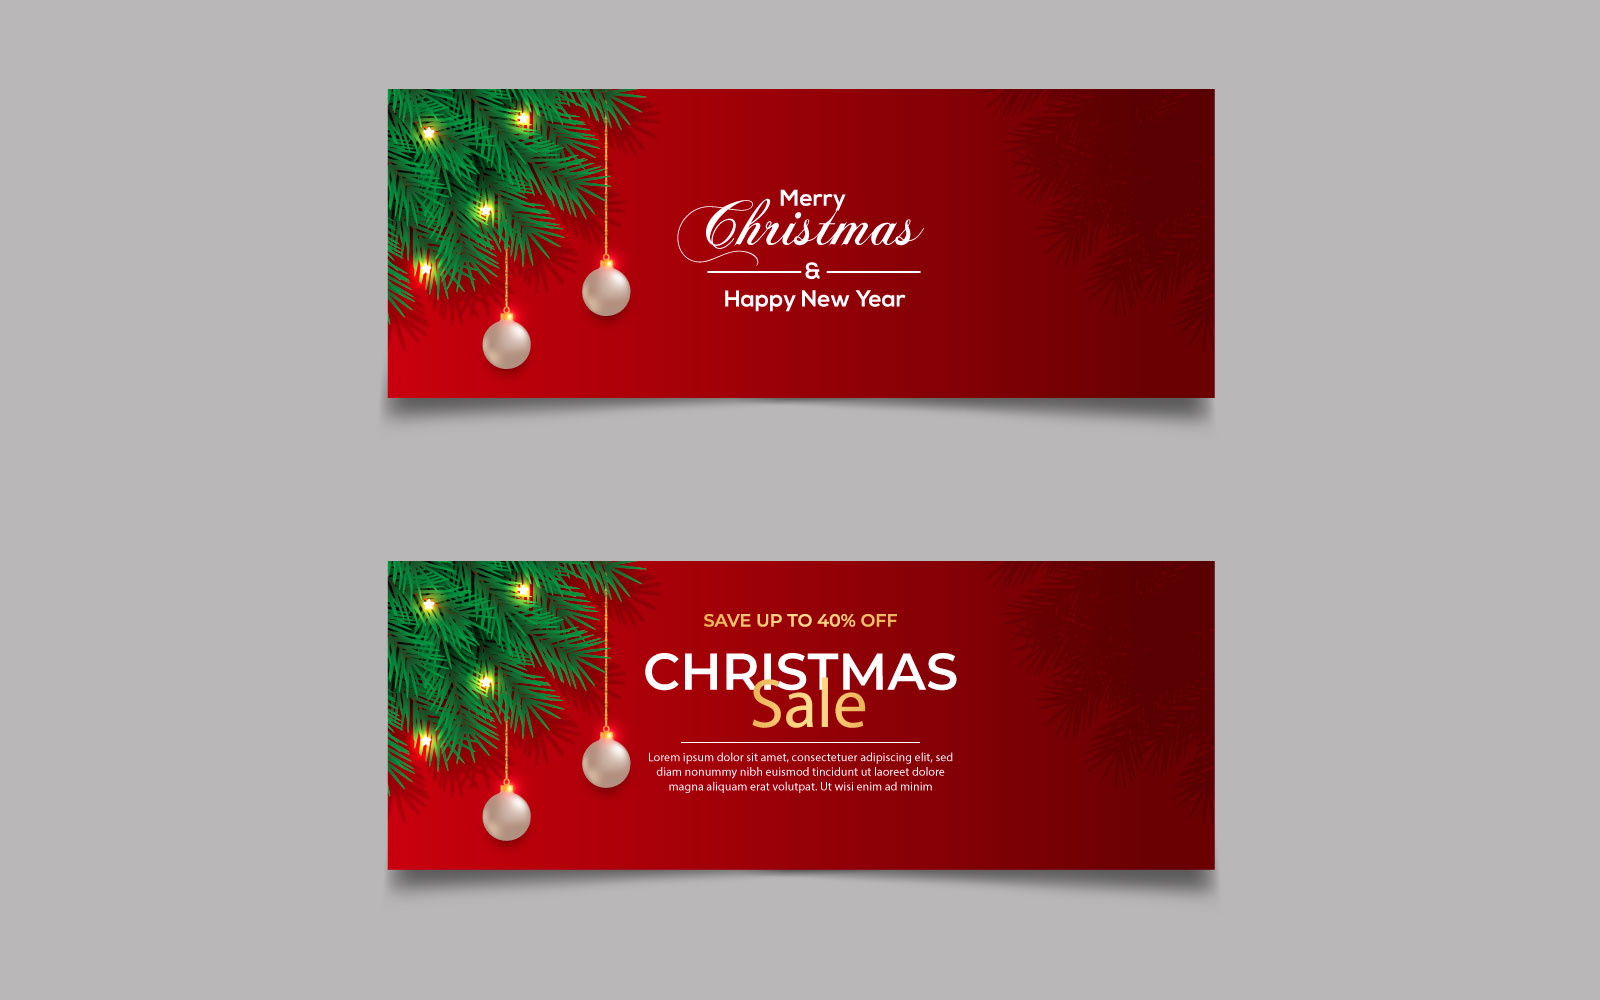 Merry Christmas season celebration social media cover template and christmas sale design